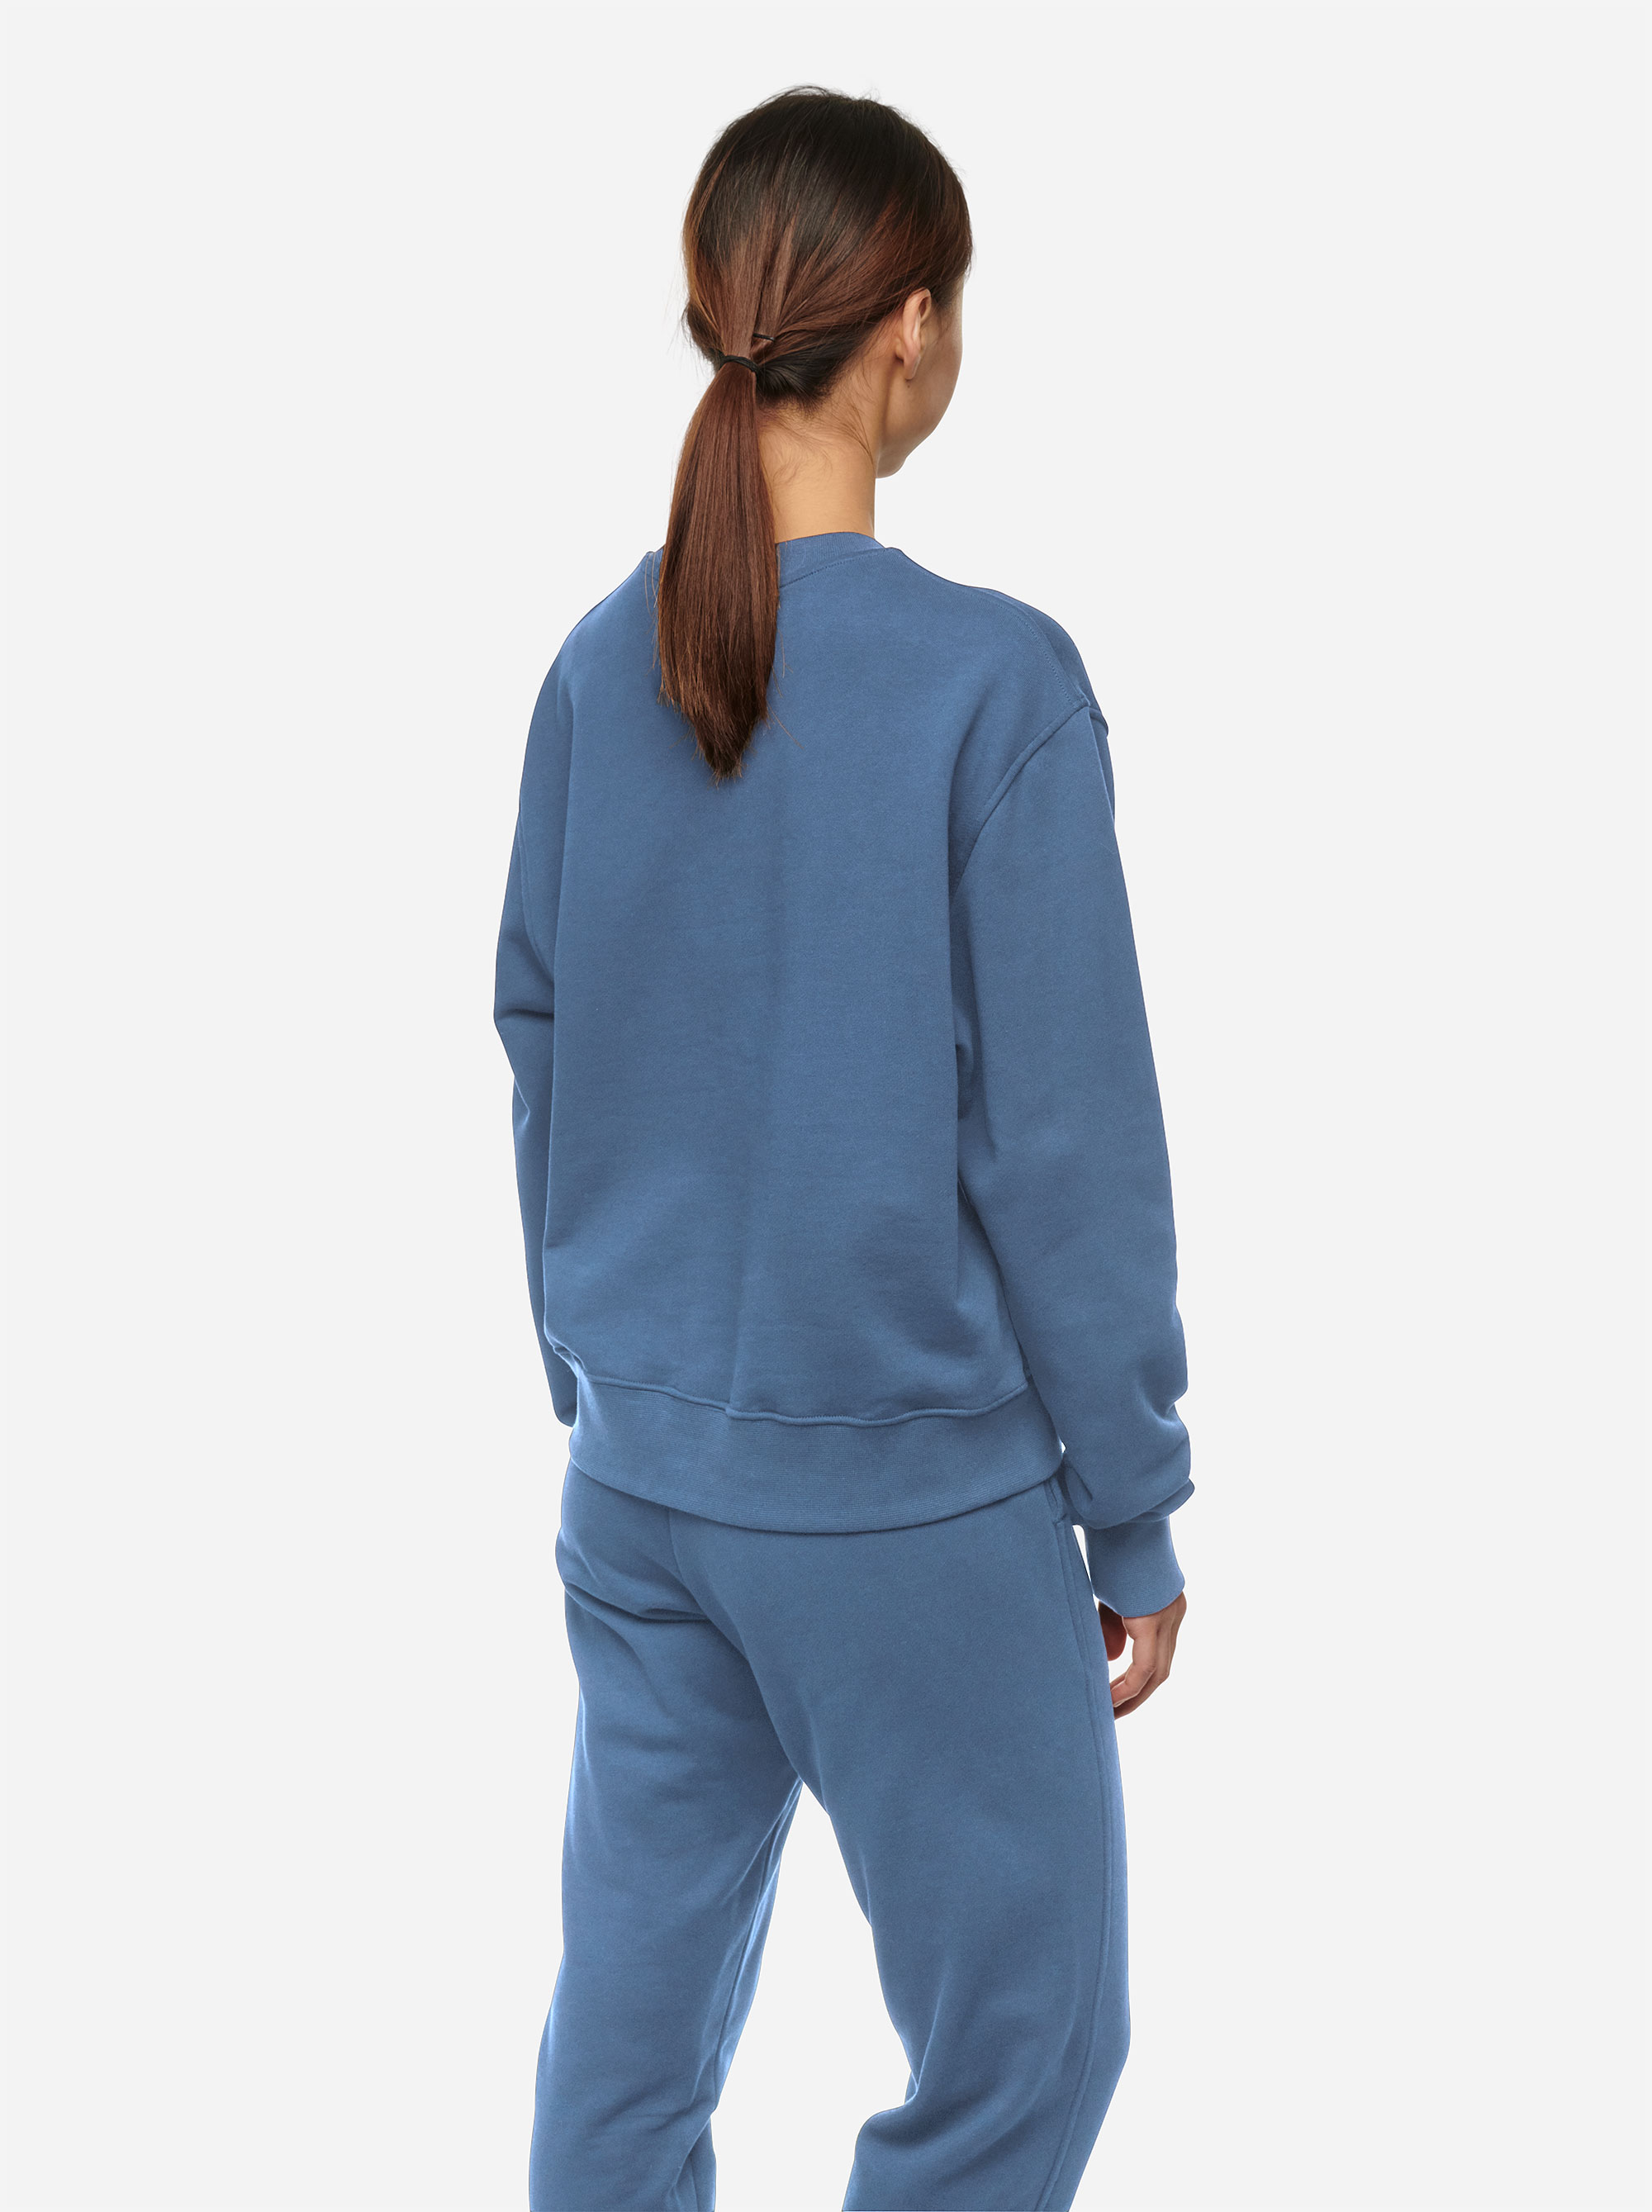 Teym - The Sweatshirt - Blue Grey - Women - 3